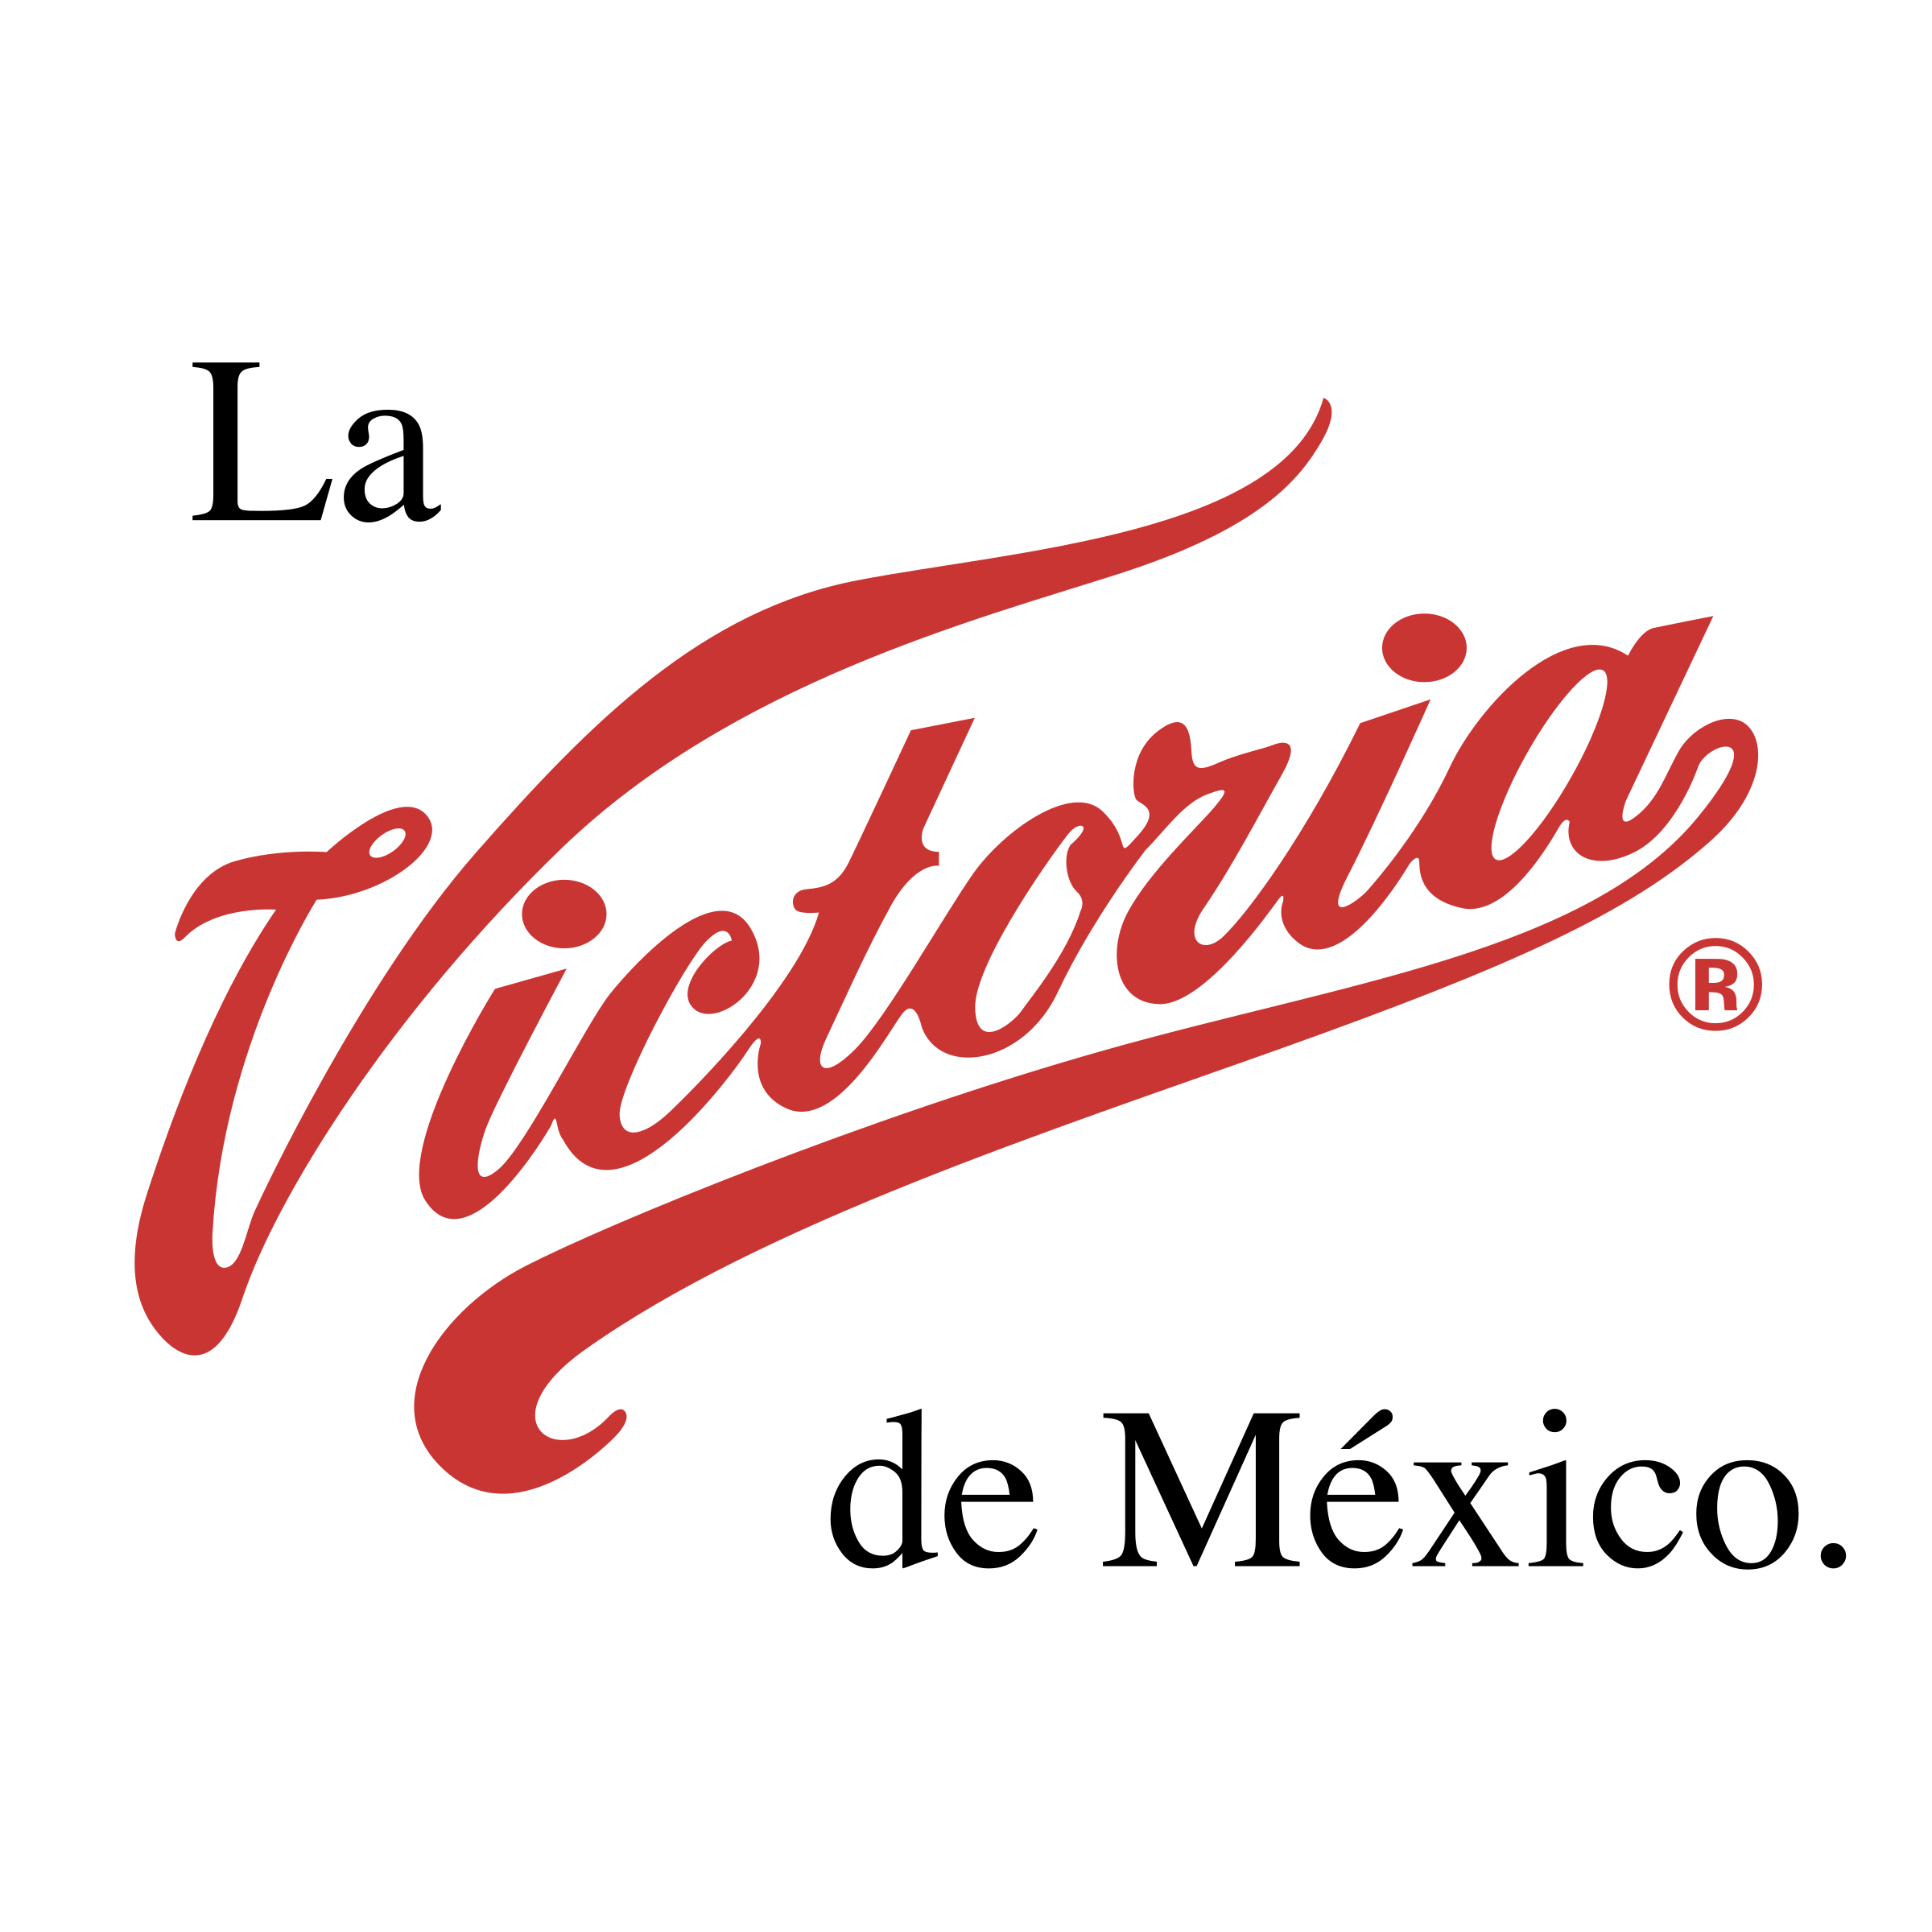 Mexico Logo - La Victoria de Mexico Logo PNG Transparent & SVG Vector